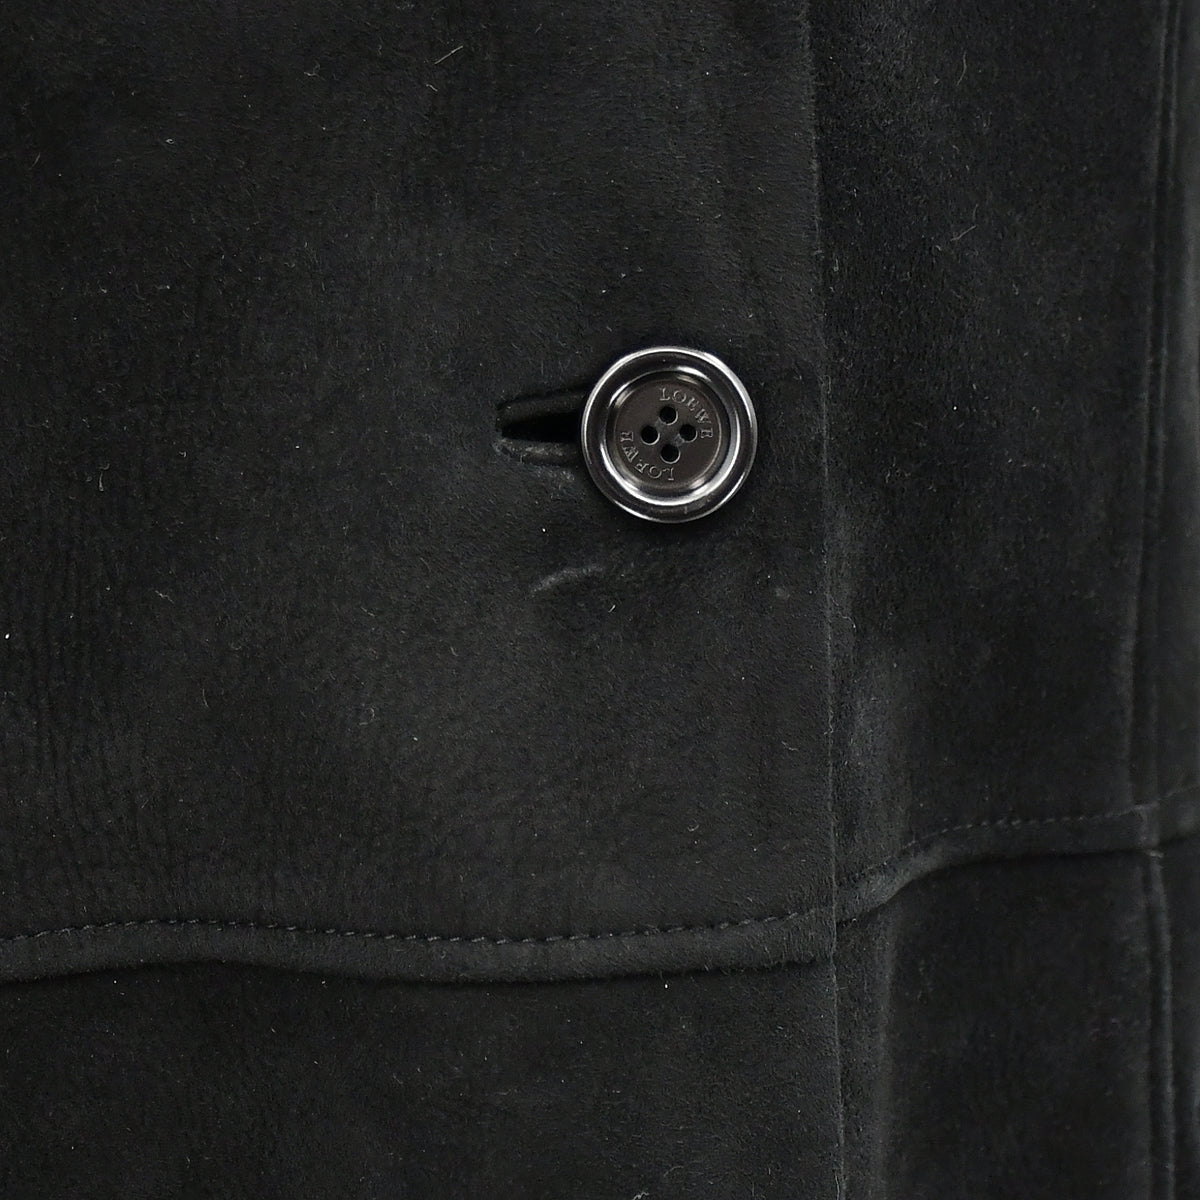 Loewe Fur Coat Black 